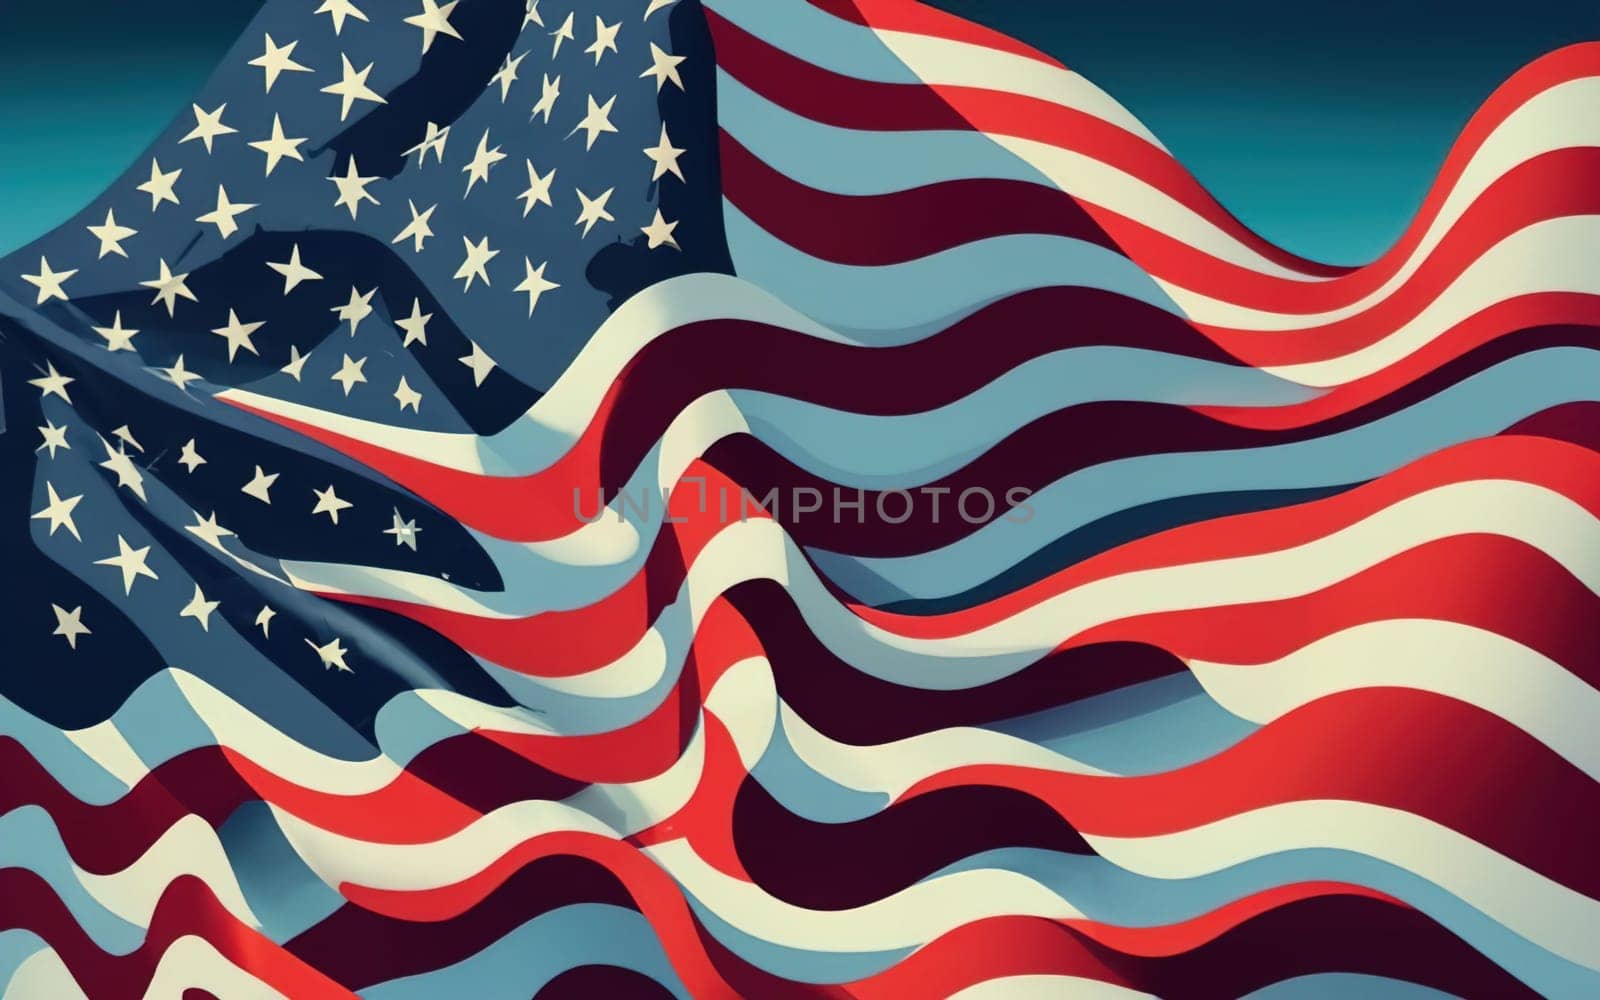 Dark Blue-Toned USA Flag Background - Patriotic American Flag Illustration by igor010